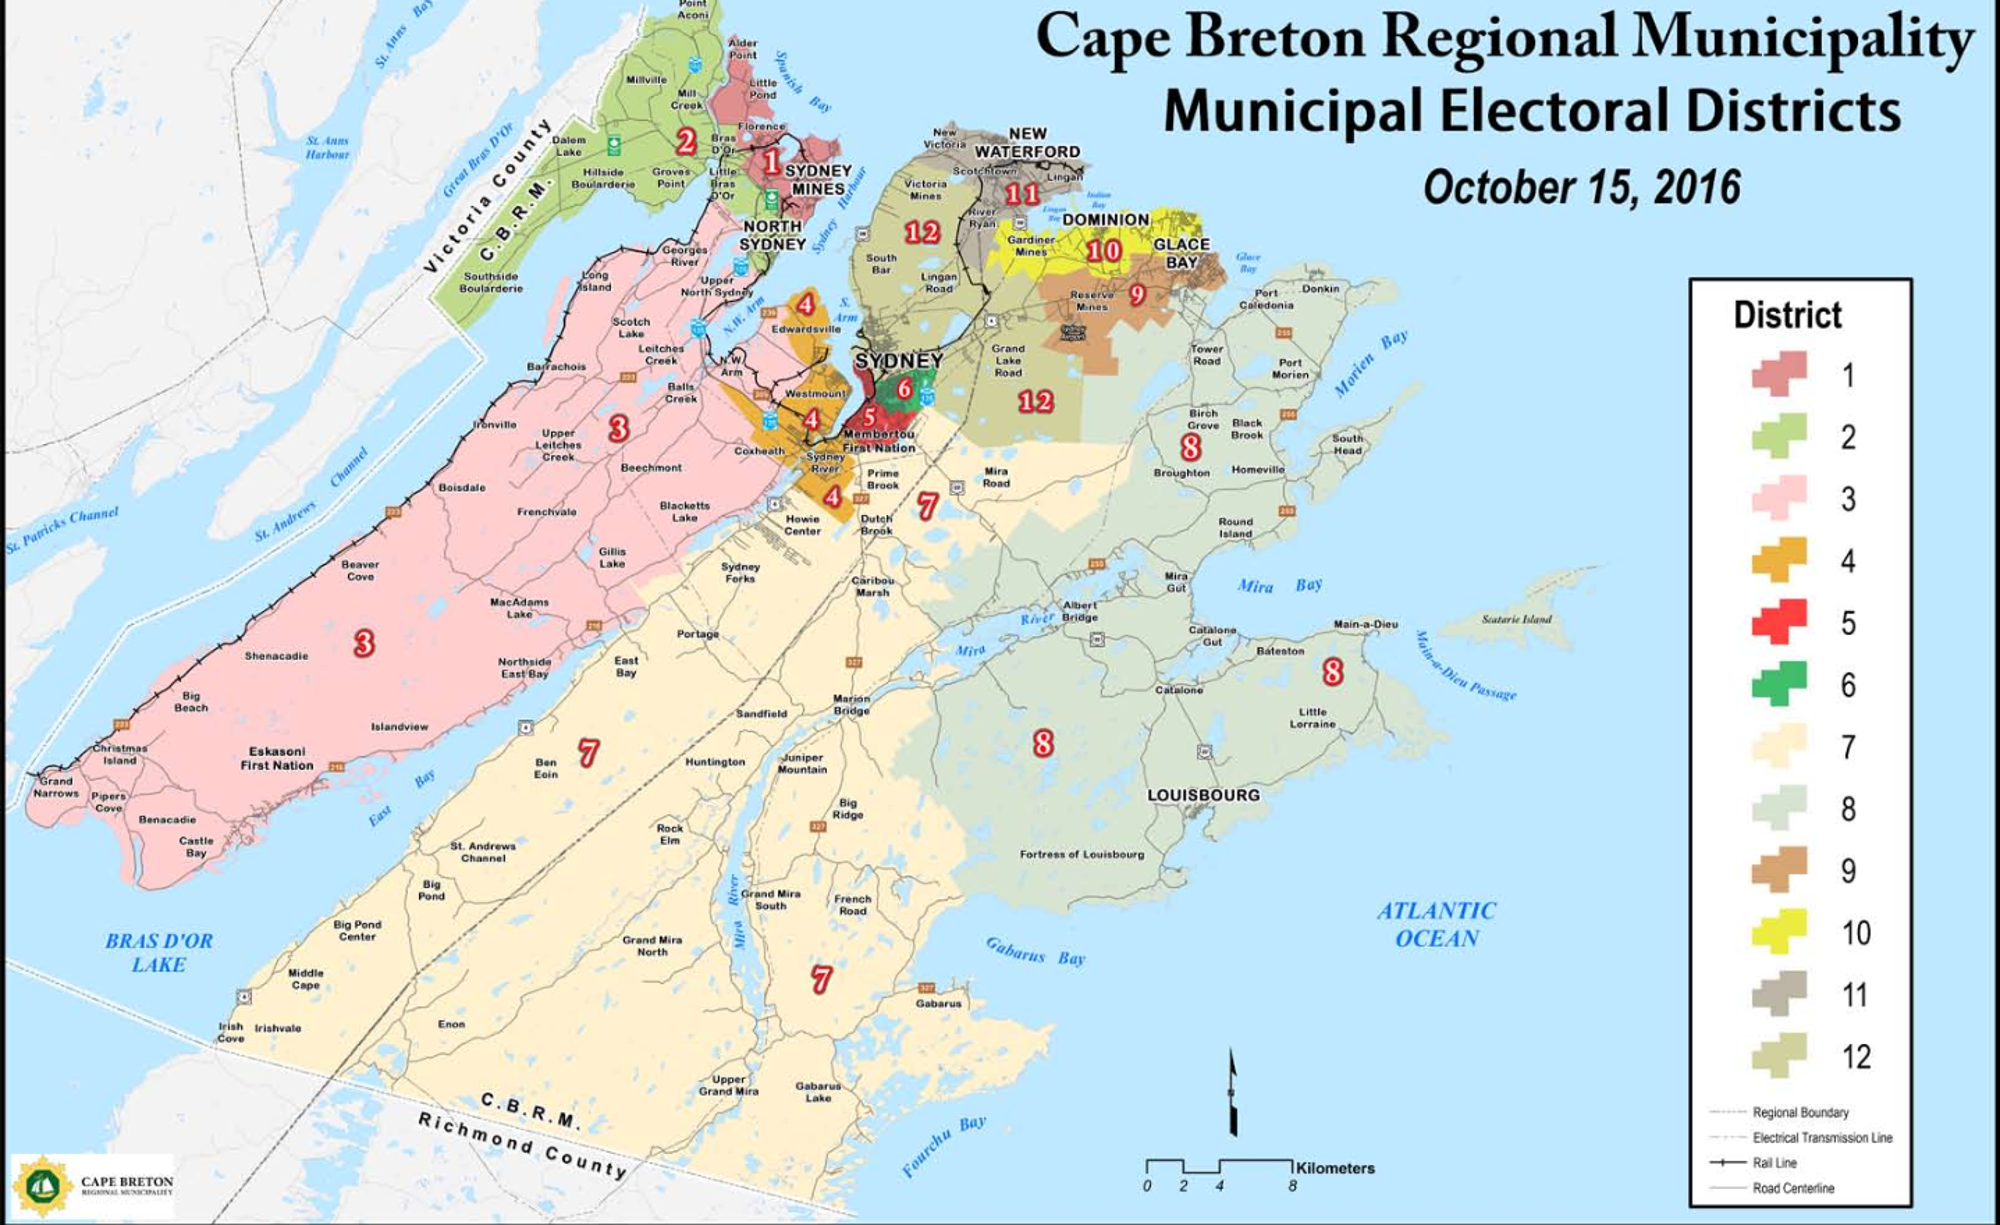 CBRM electoral districts map